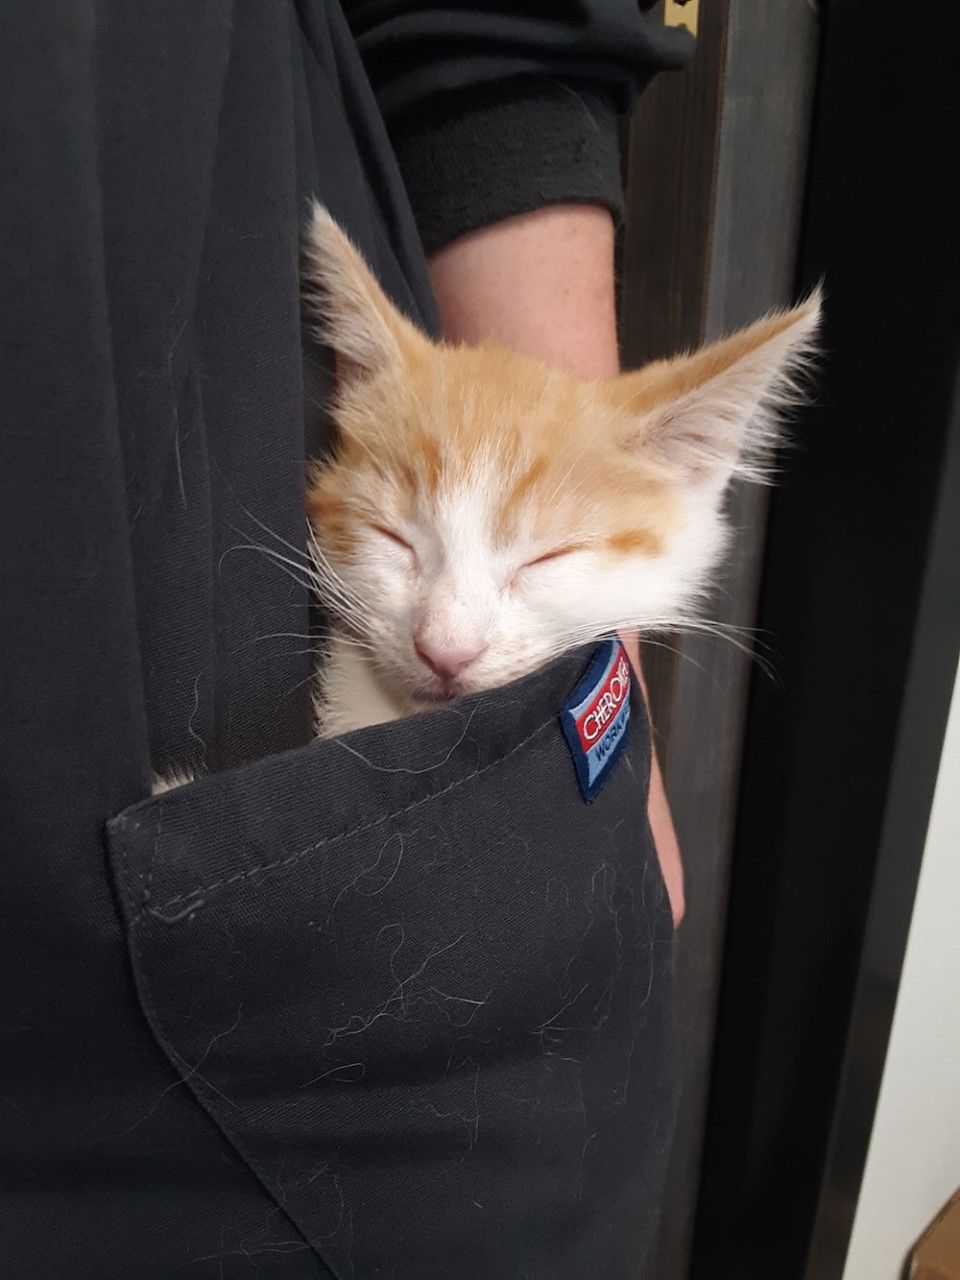 a cat sleeping in a pocket